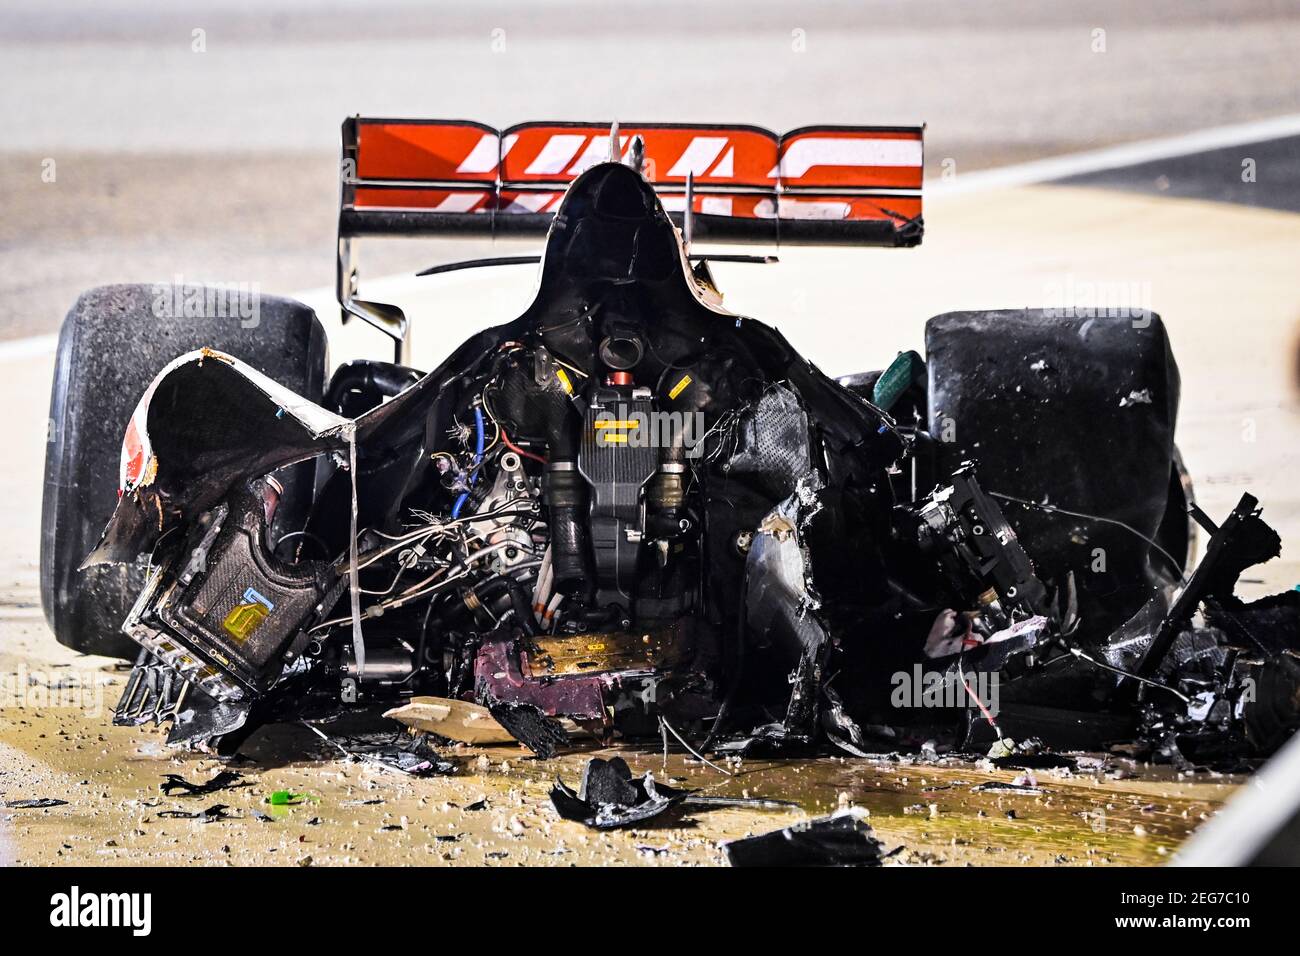 GROSJEAN Romain (fra), Haas F1 Team VF-20 Ferrari, debris of his car after his massive crash during the Formula 1 Gulf Air Bahrain Grand Prix 2020, from November 27 to 29, 2020 on the Bahrain International Circuit, in Sakhir, Bahrain - Photo DPPI Stock Photo